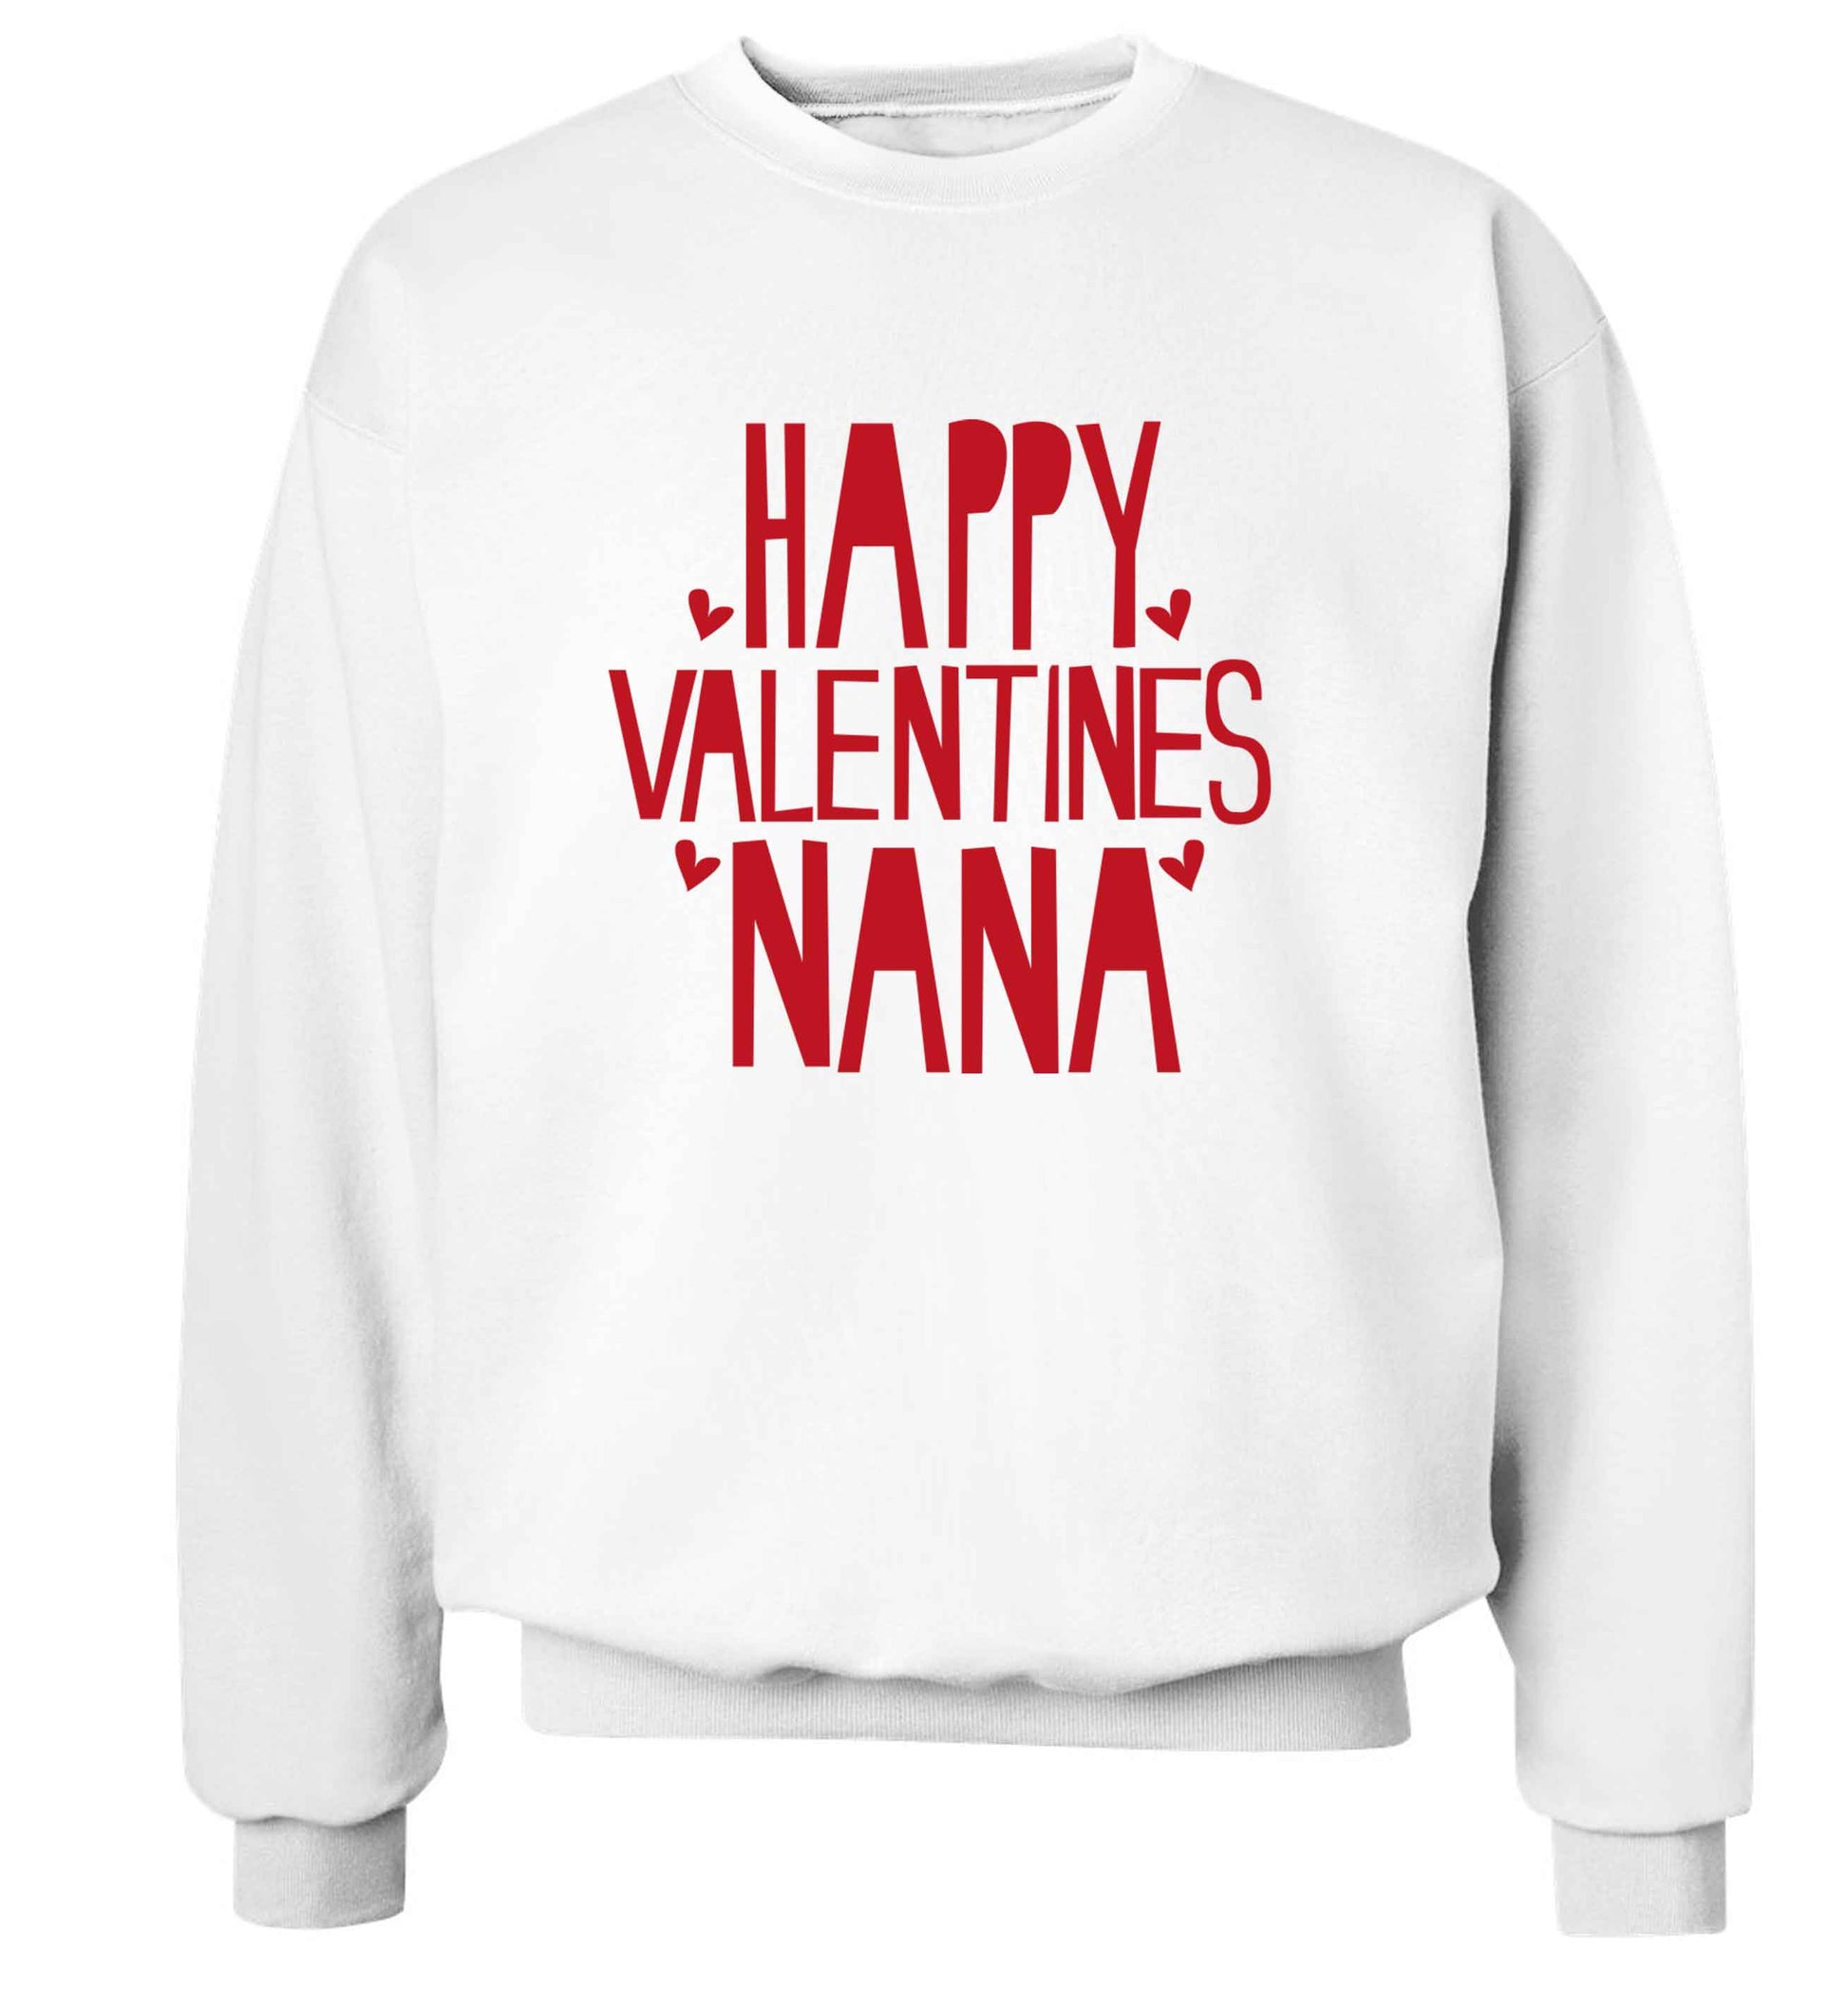 Happy valentines nana adult's unisex white sweater 2XL